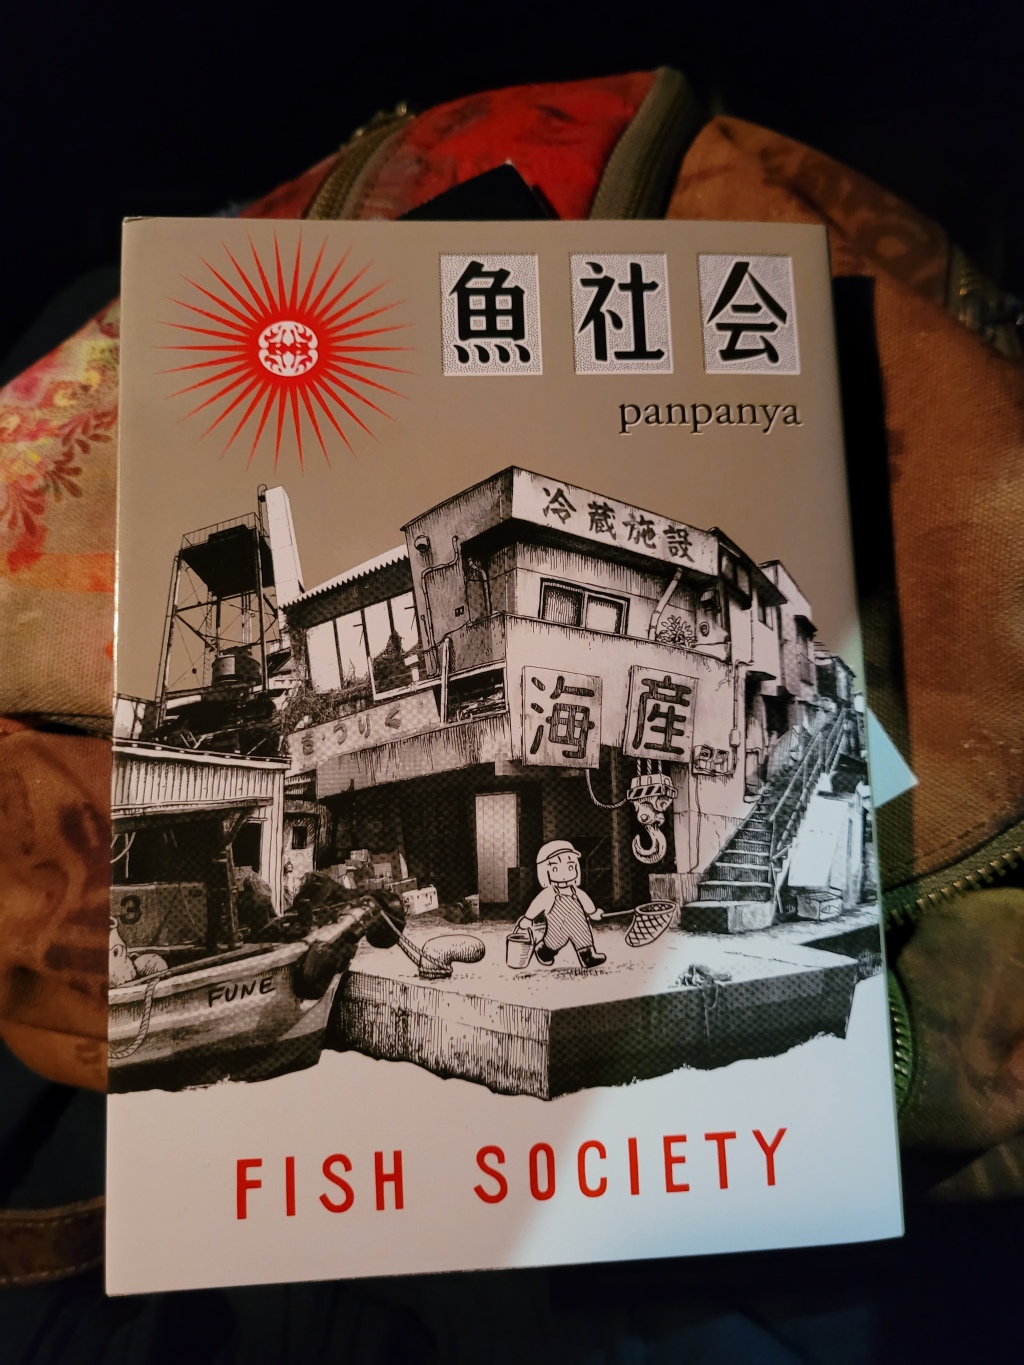 Fish Society – panpanya